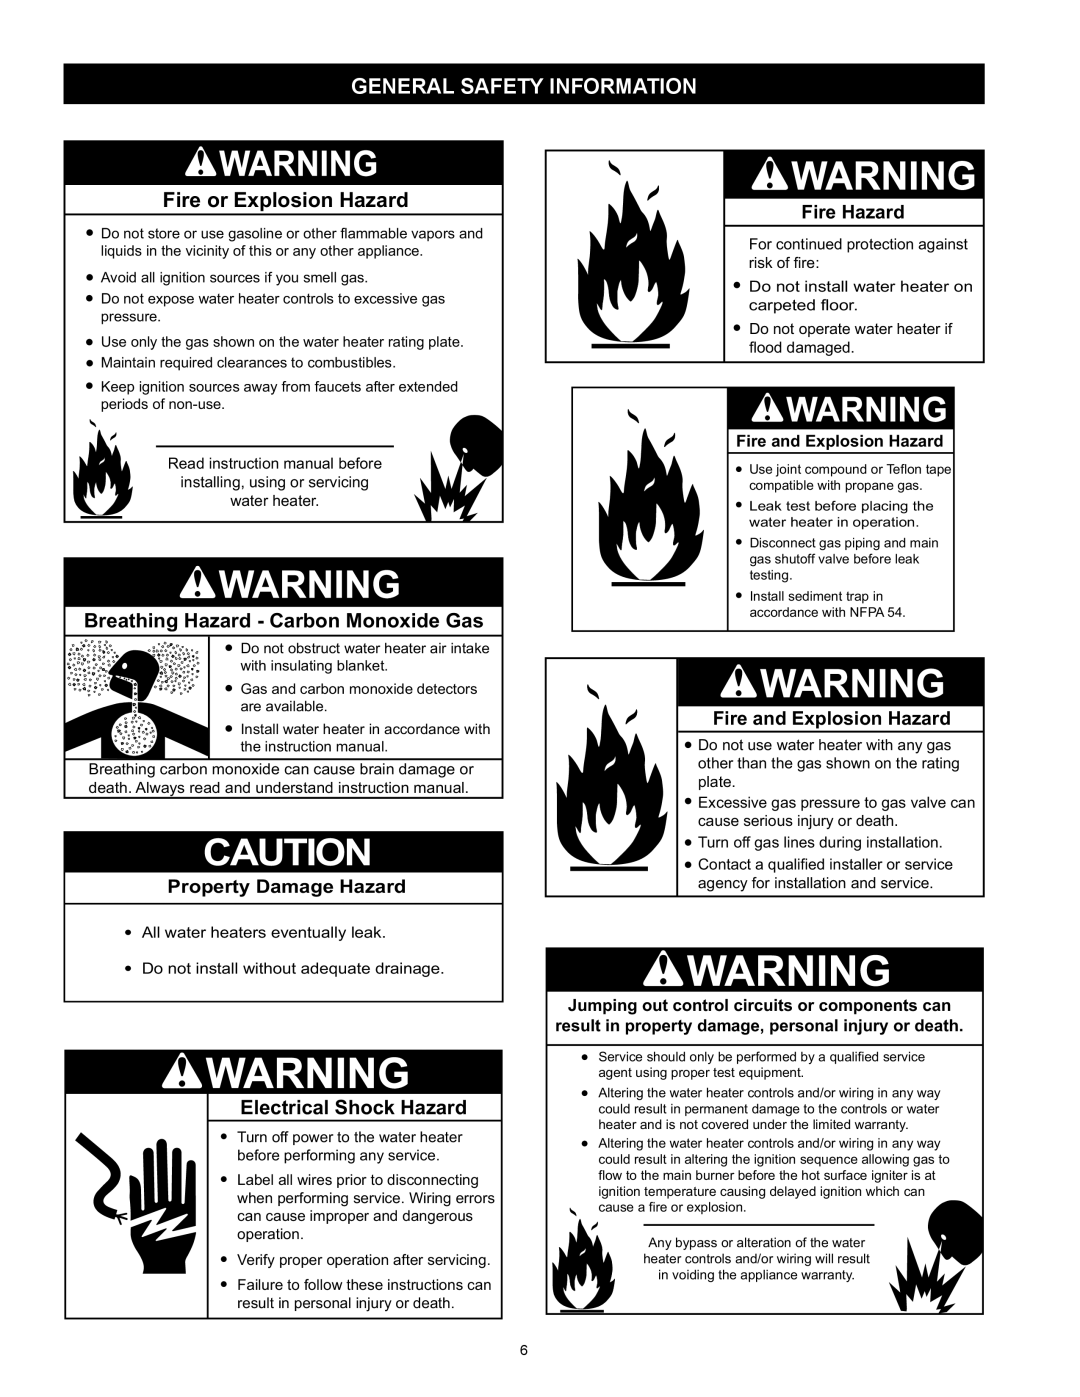 American Water Heater VG6250T100 General Safety Information, Fire or Explosion Hazard, Electrical Shock Hazard 